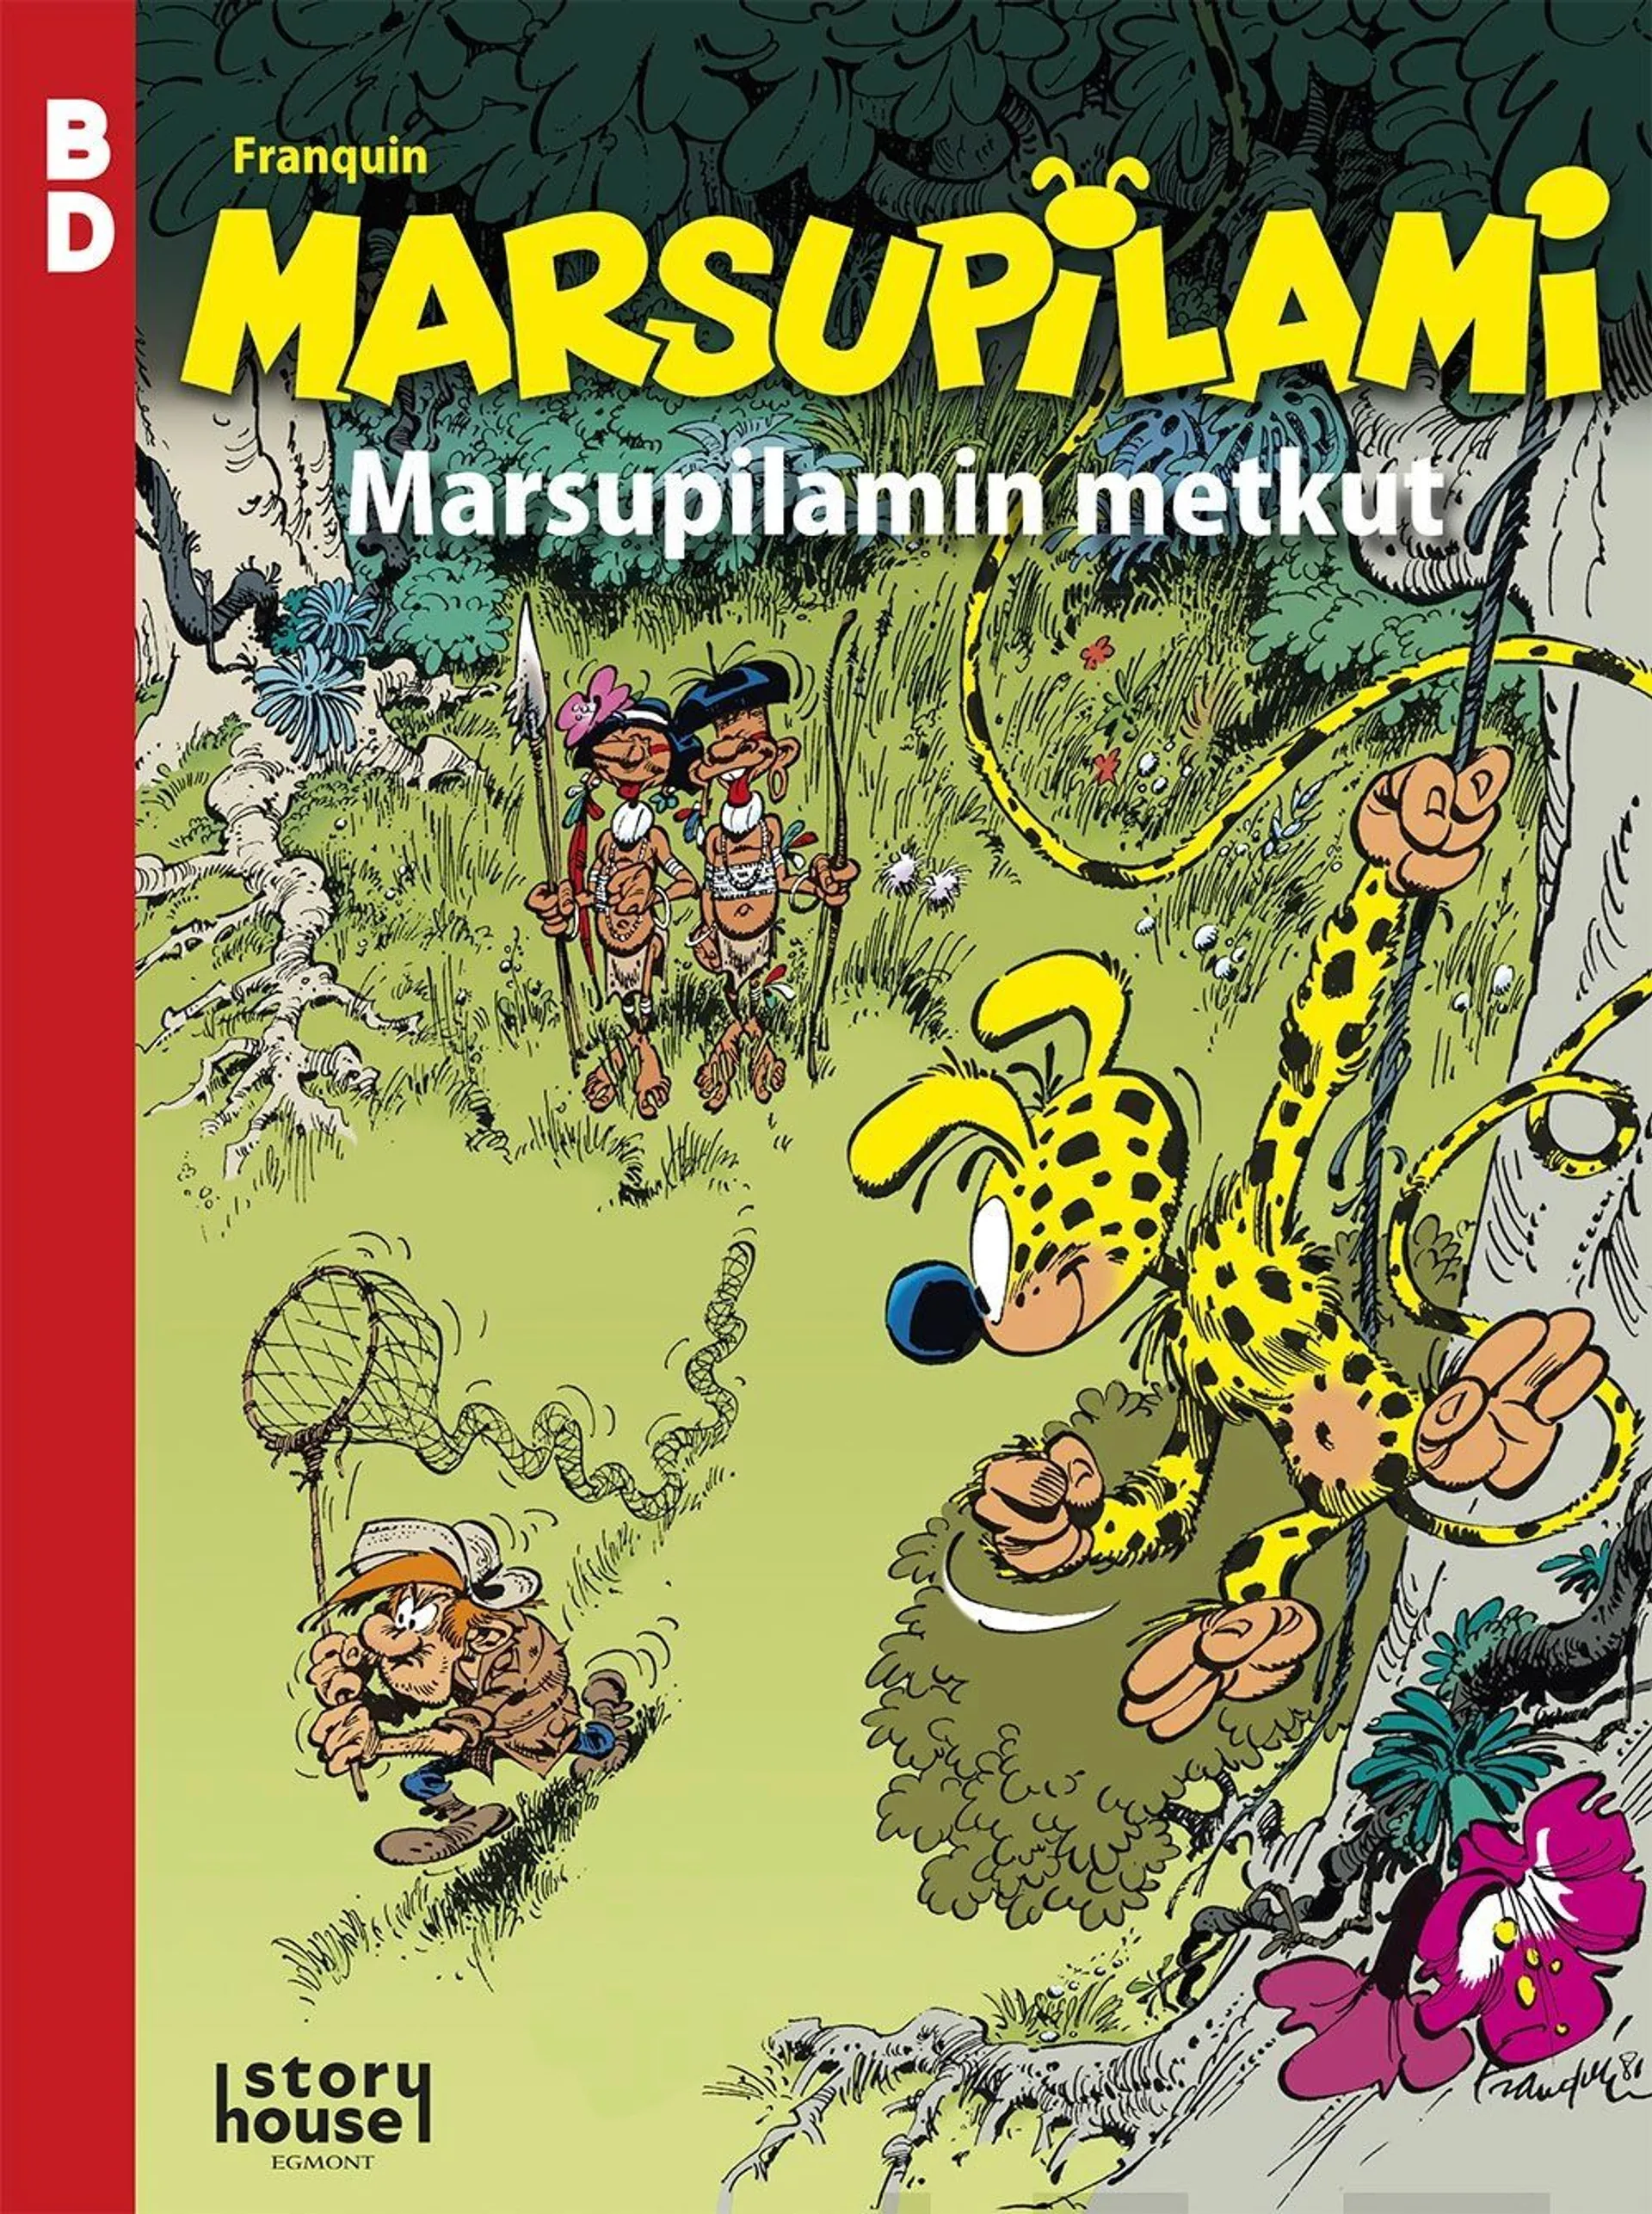 Franquin, Marsupilami: Marsupilamin metkut - BD 15